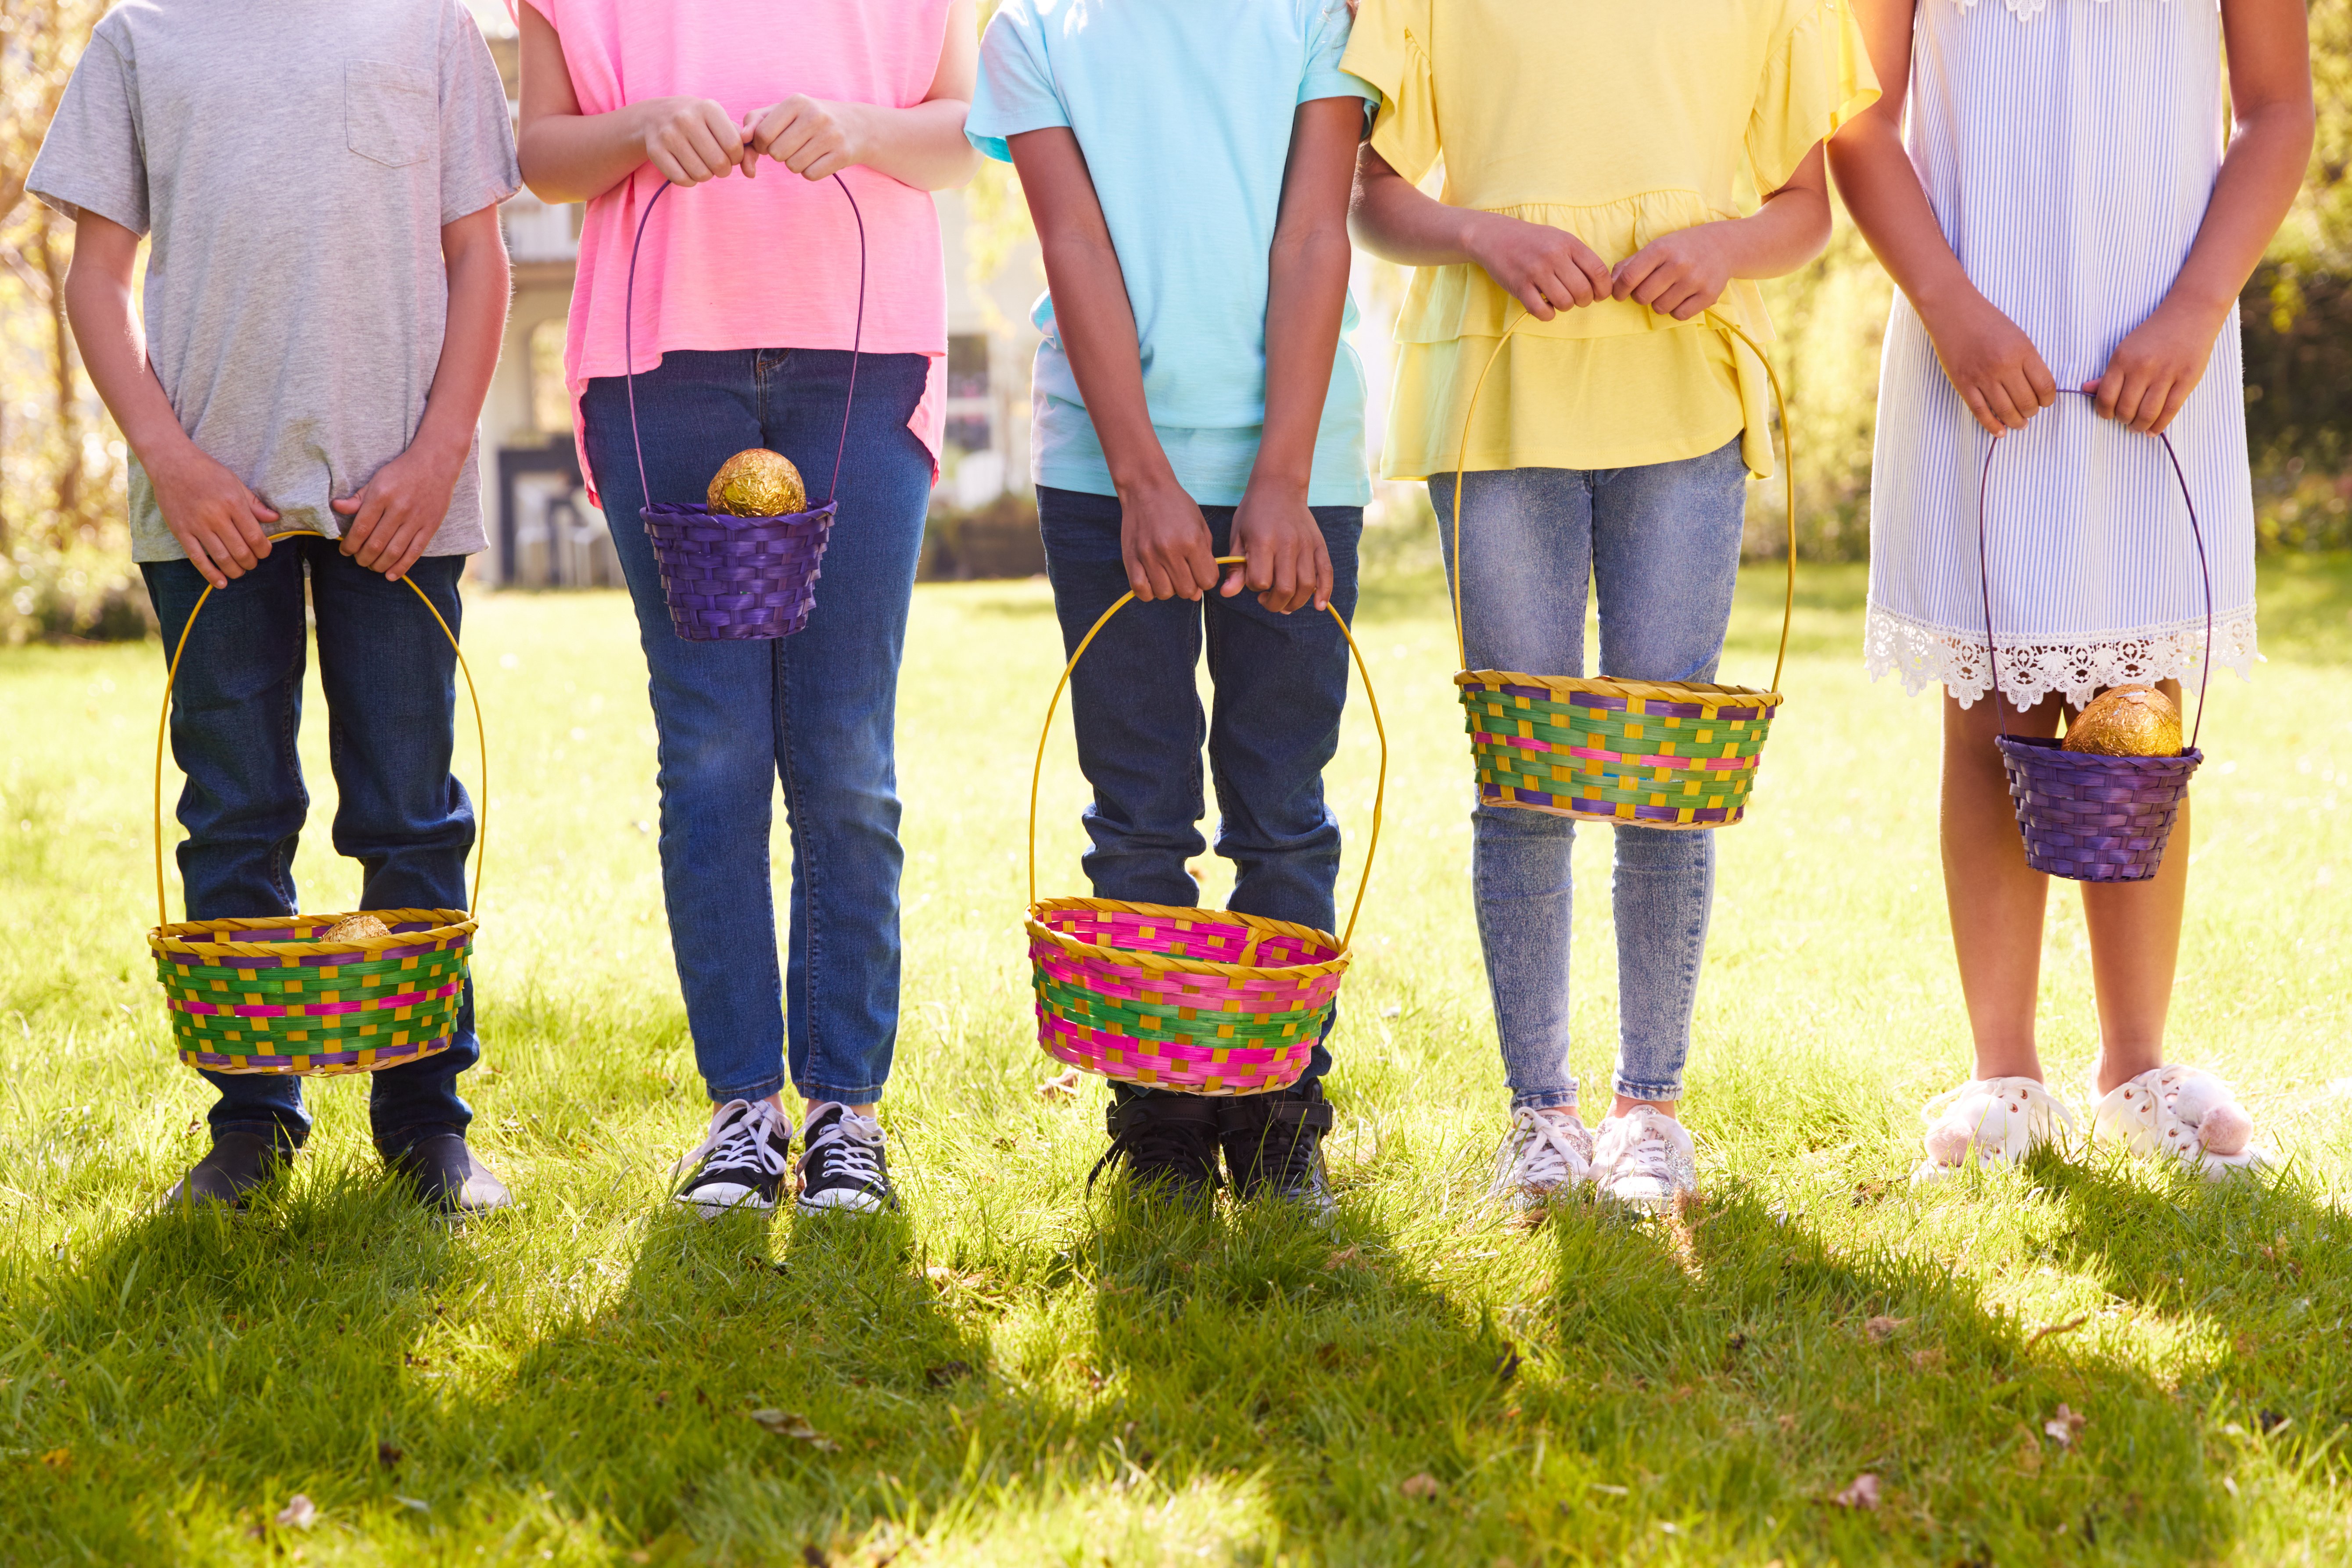 Close Up Of Five Children Holding Baskets On Easter Egg Hunt In Garden